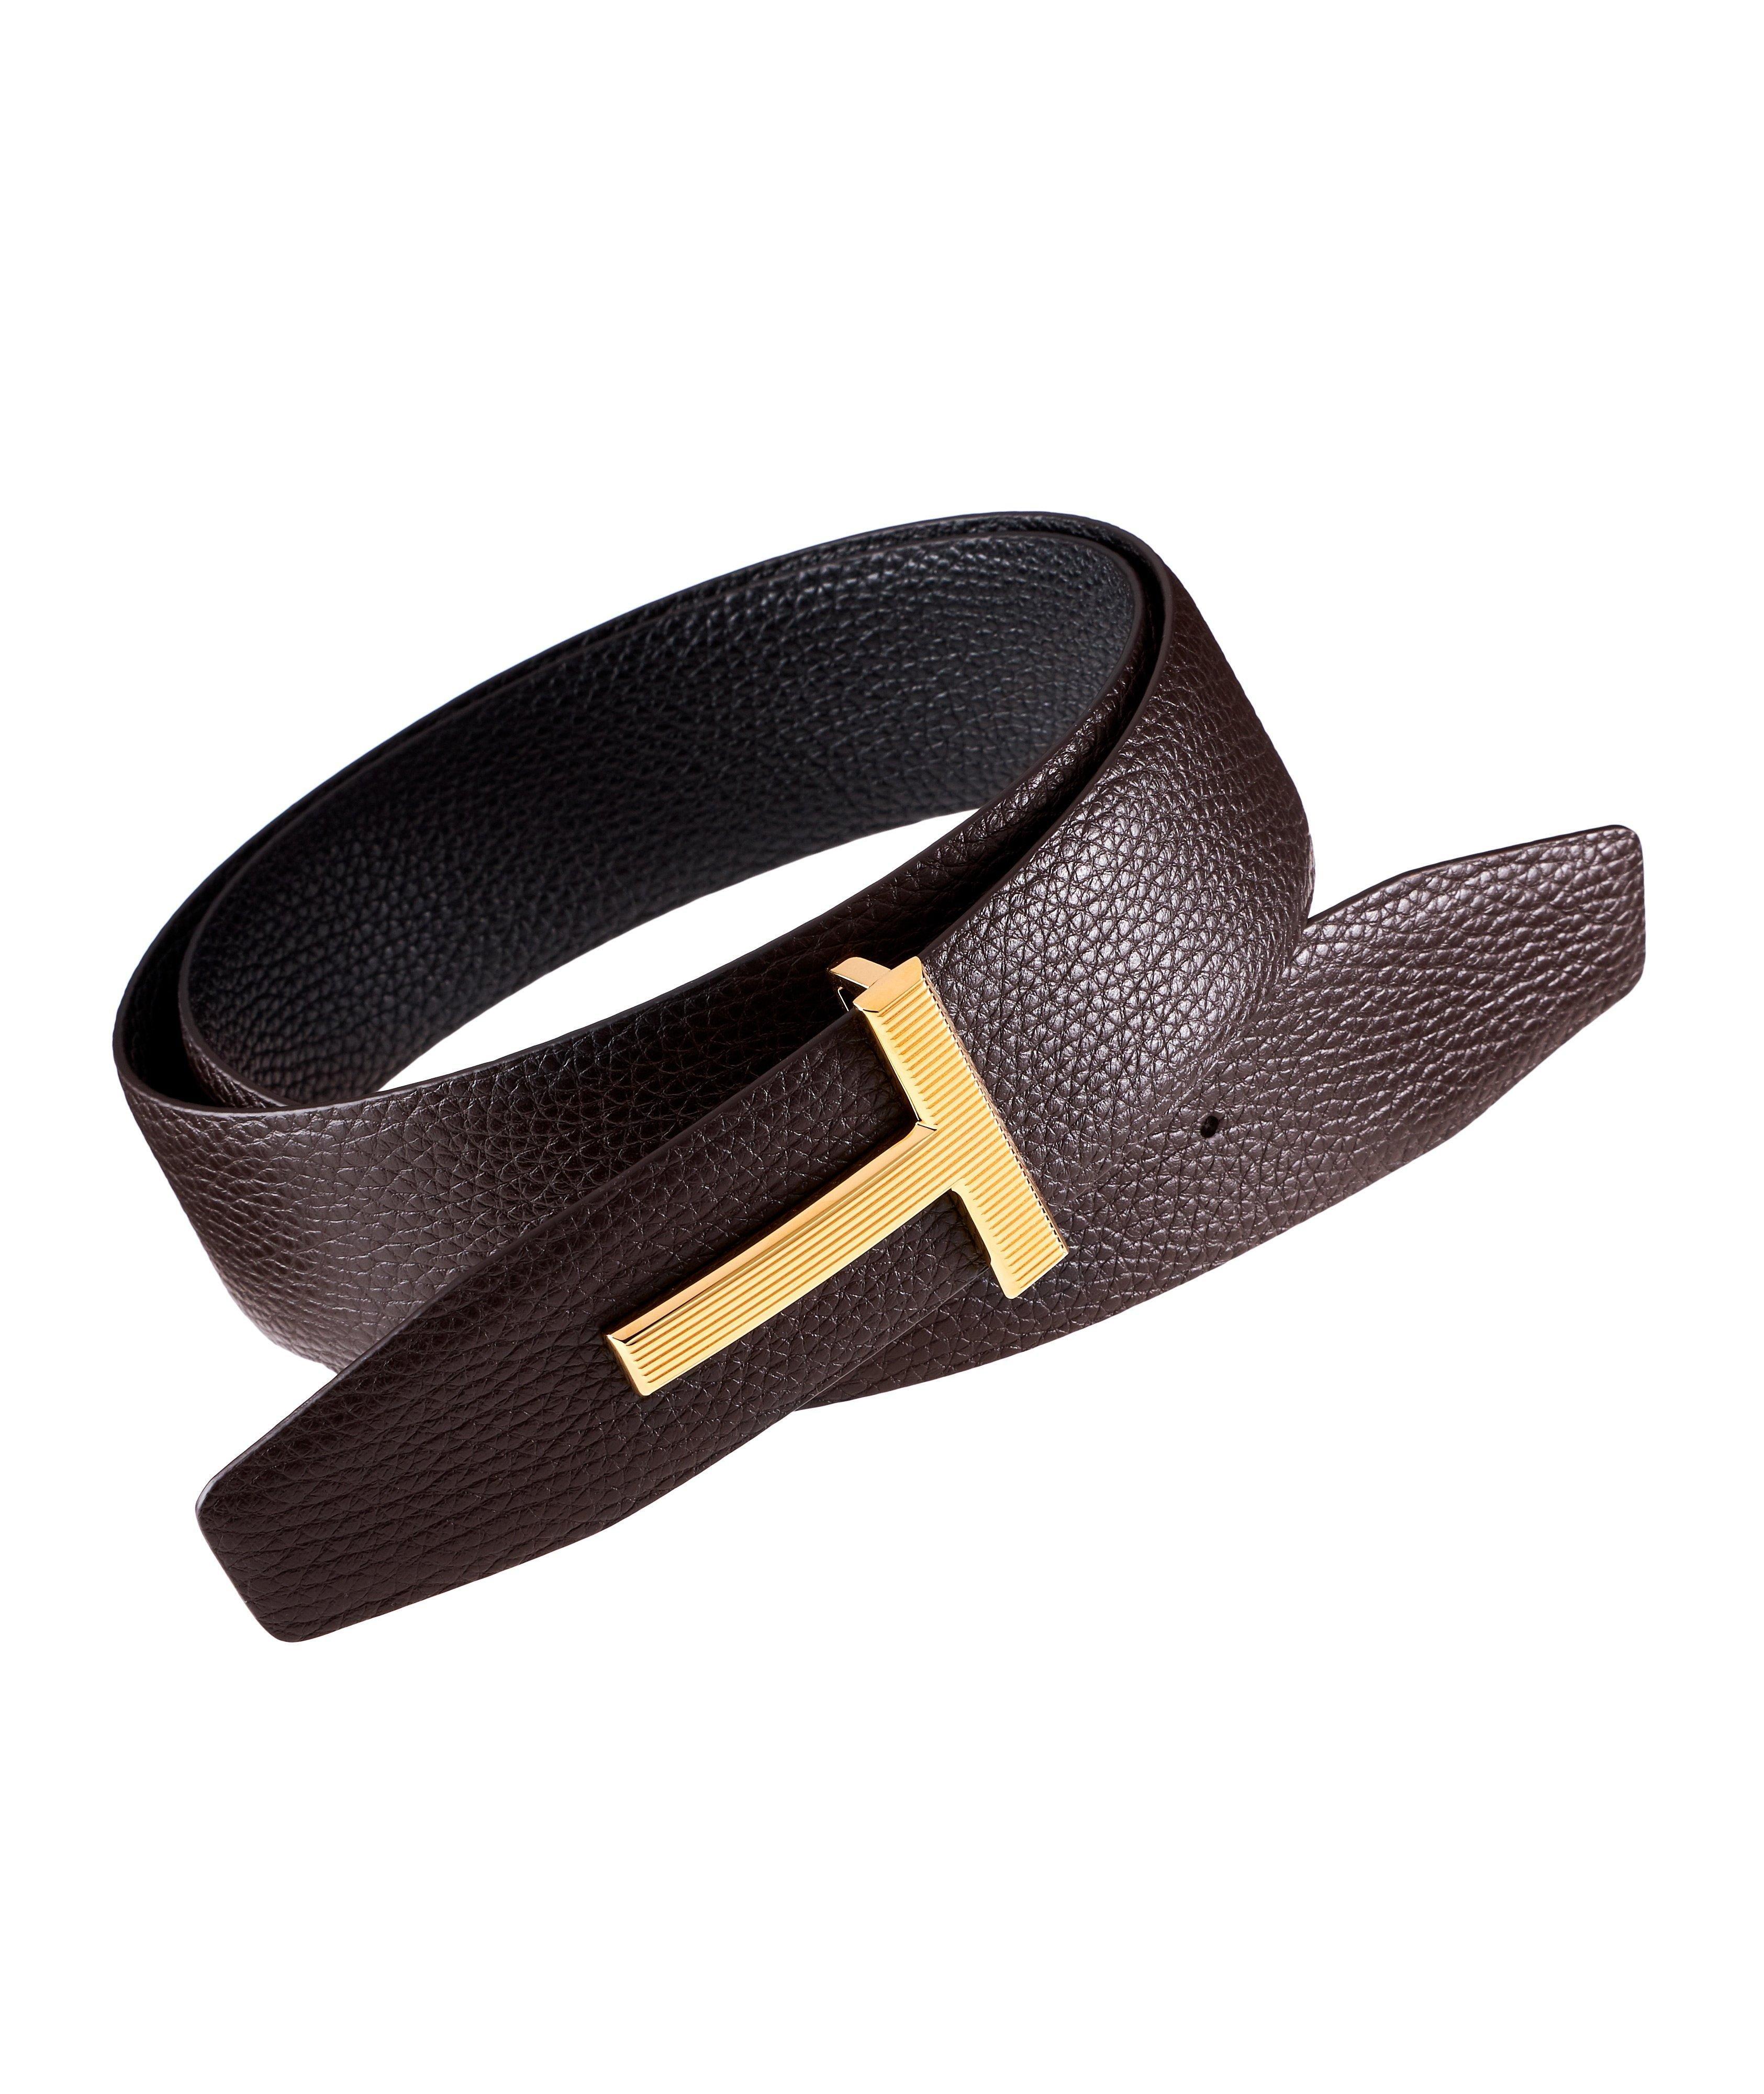 Reversible Ridged T-Buckle Leather Belt image 0